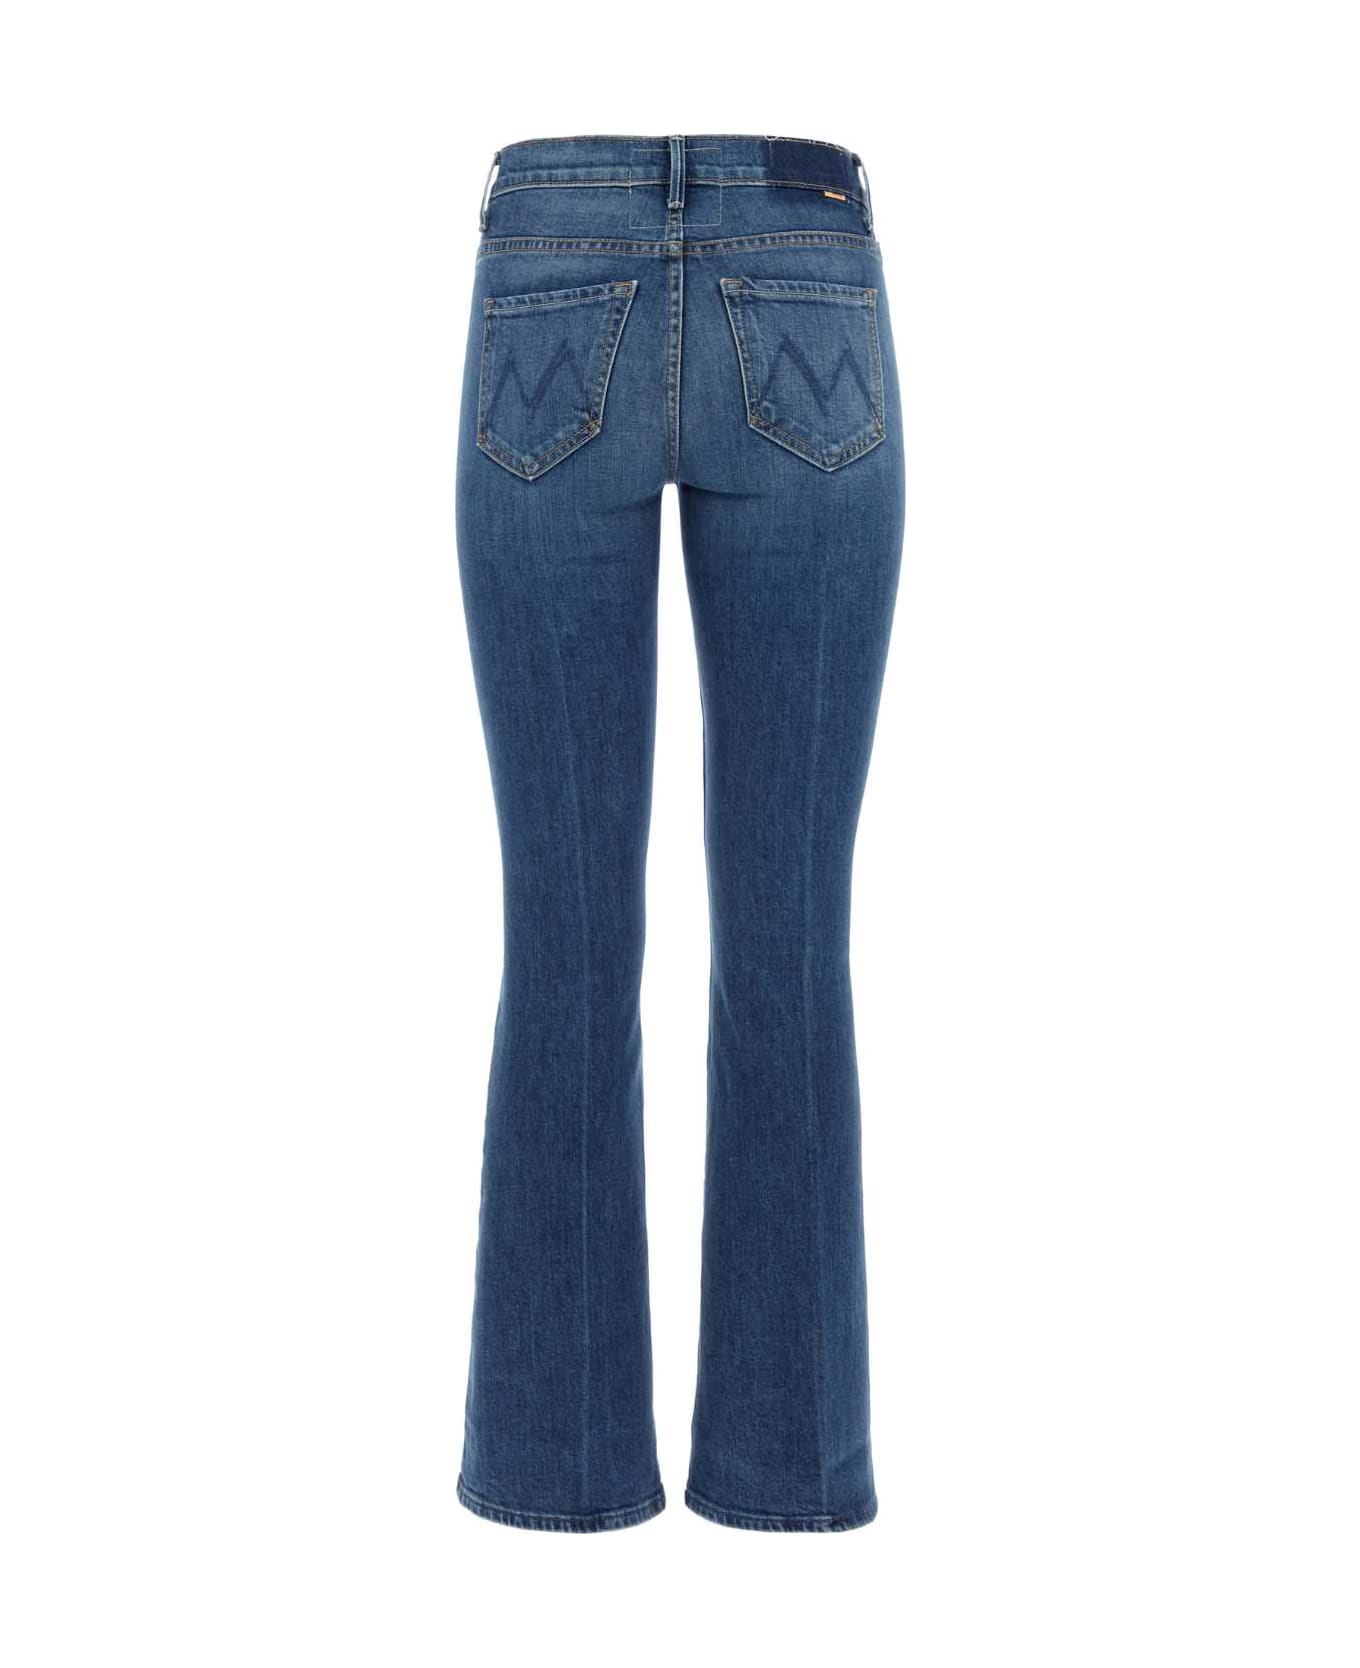 Mother Denim The Weekender Jeans - IT'SASMALLWORLD